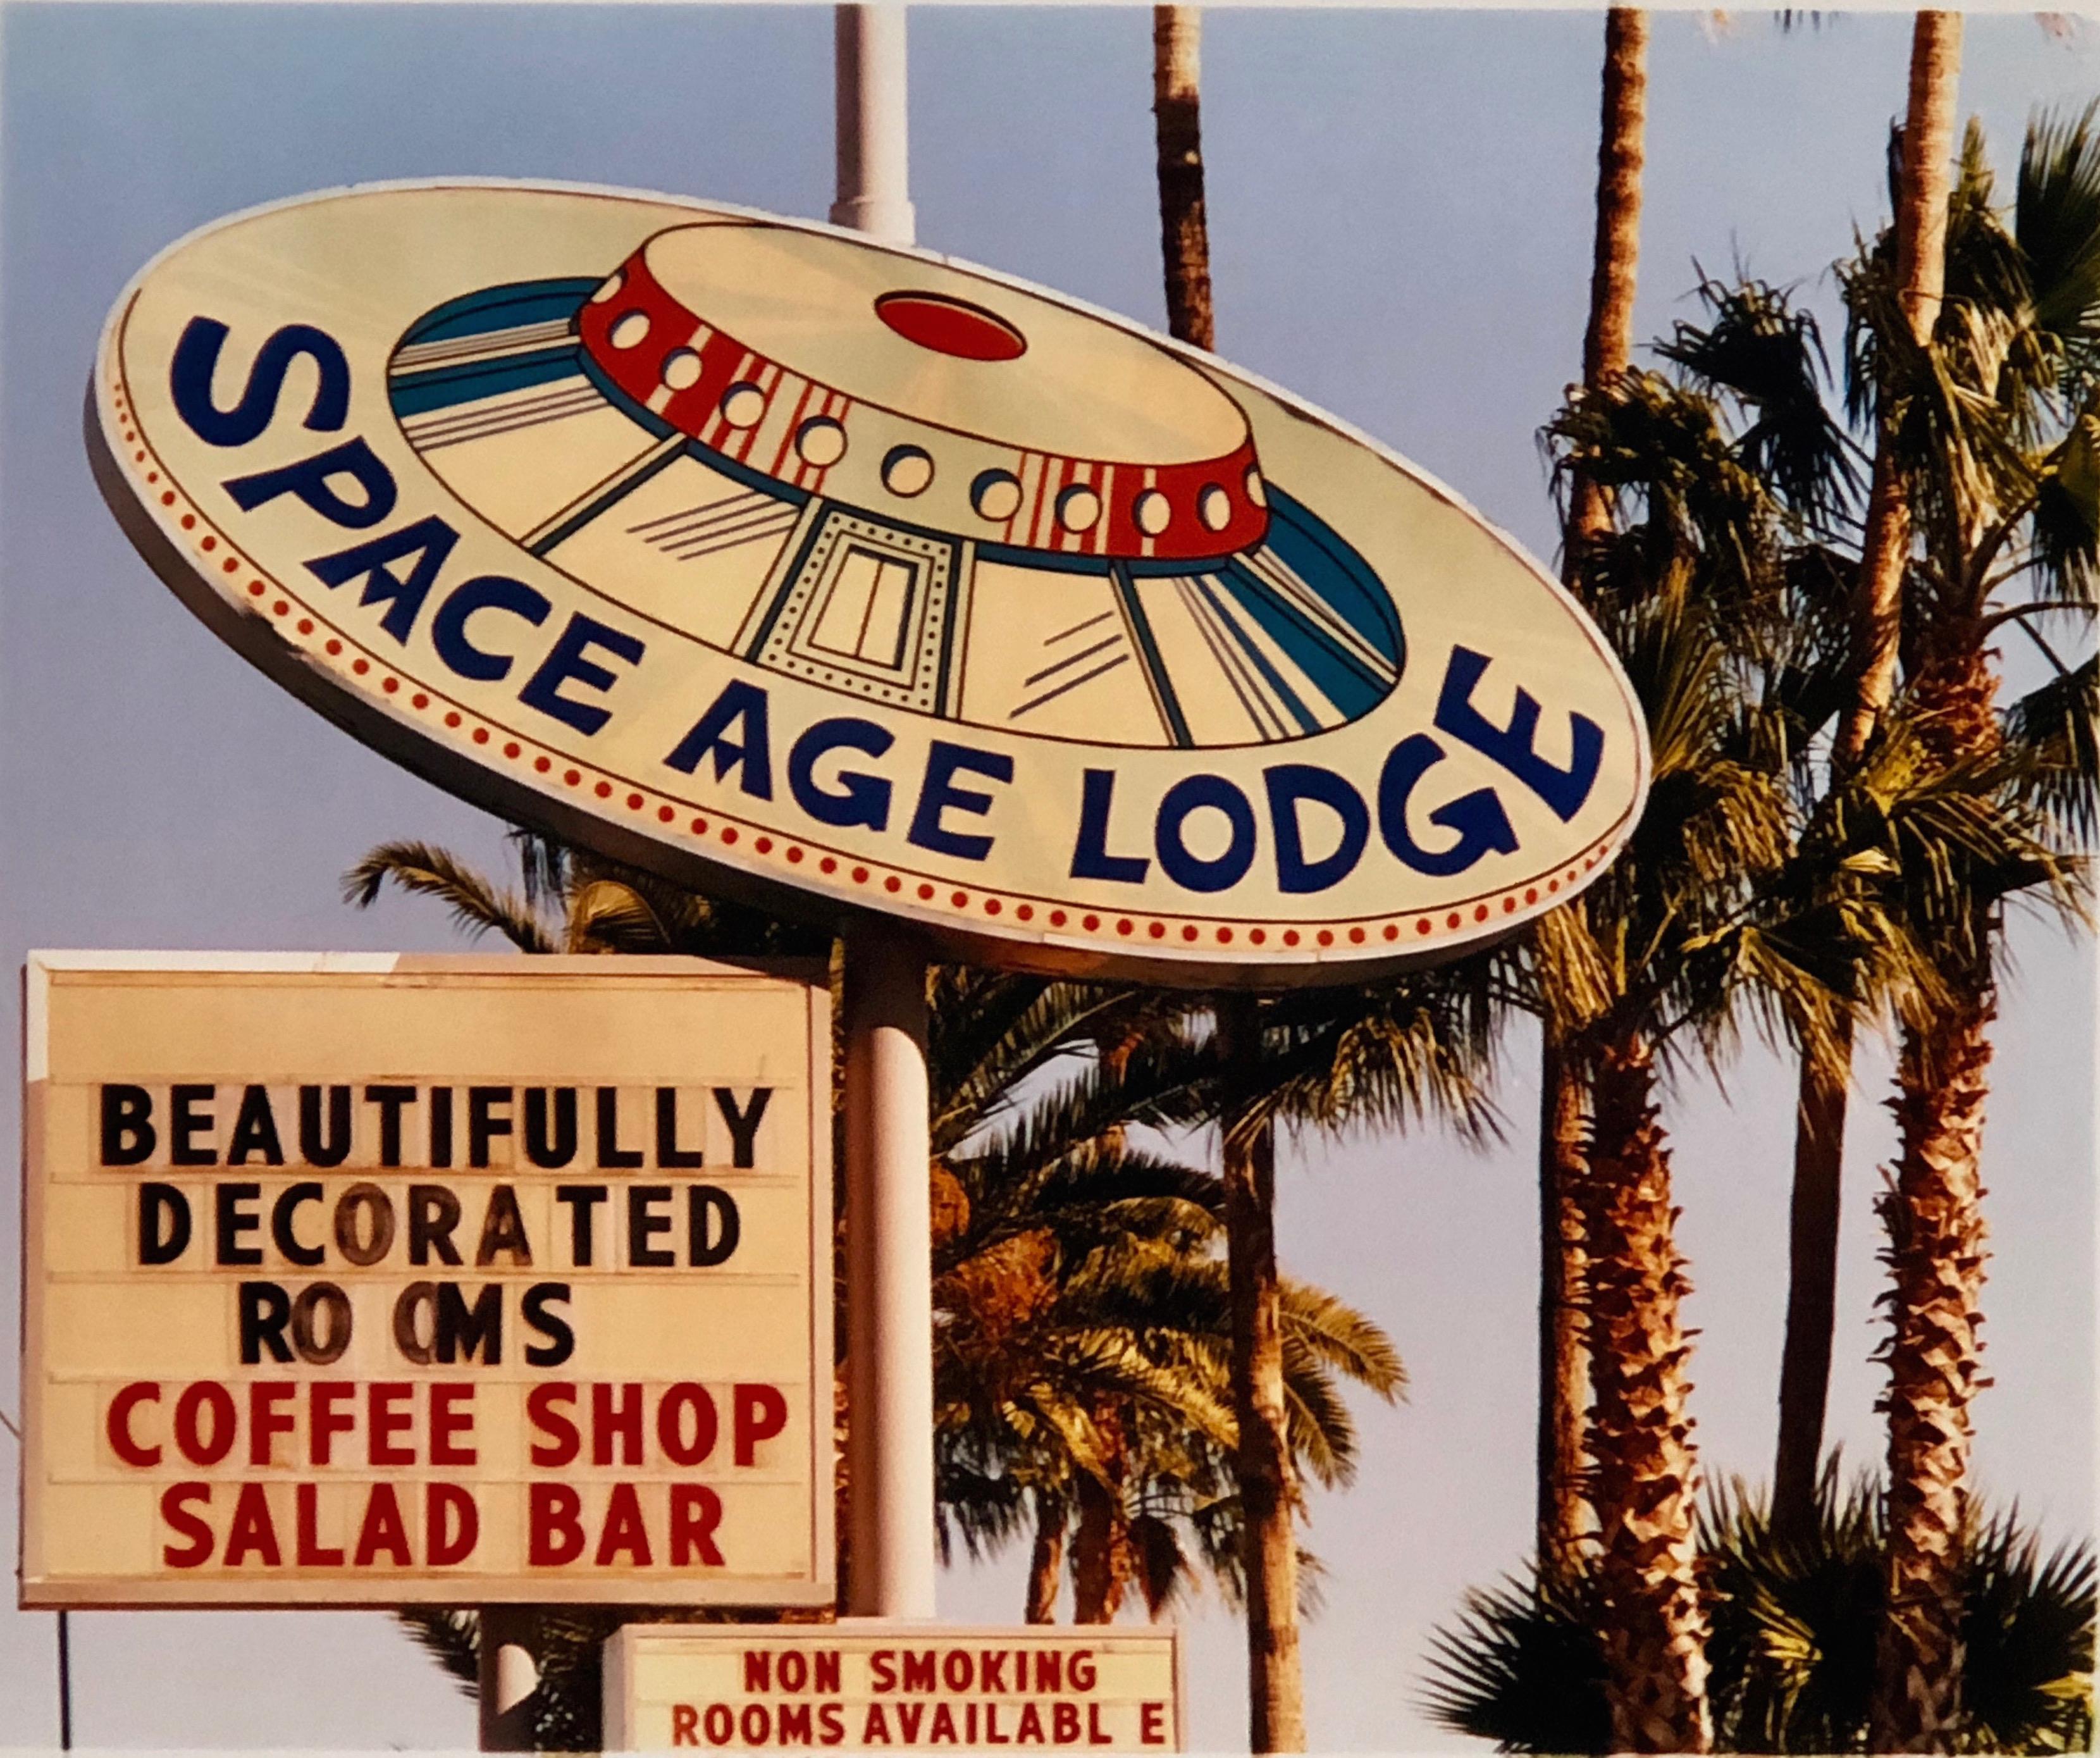 Richard Heeps Print - Space Age Lodge, Gila Bend, Arizona - Contemporary color photograph